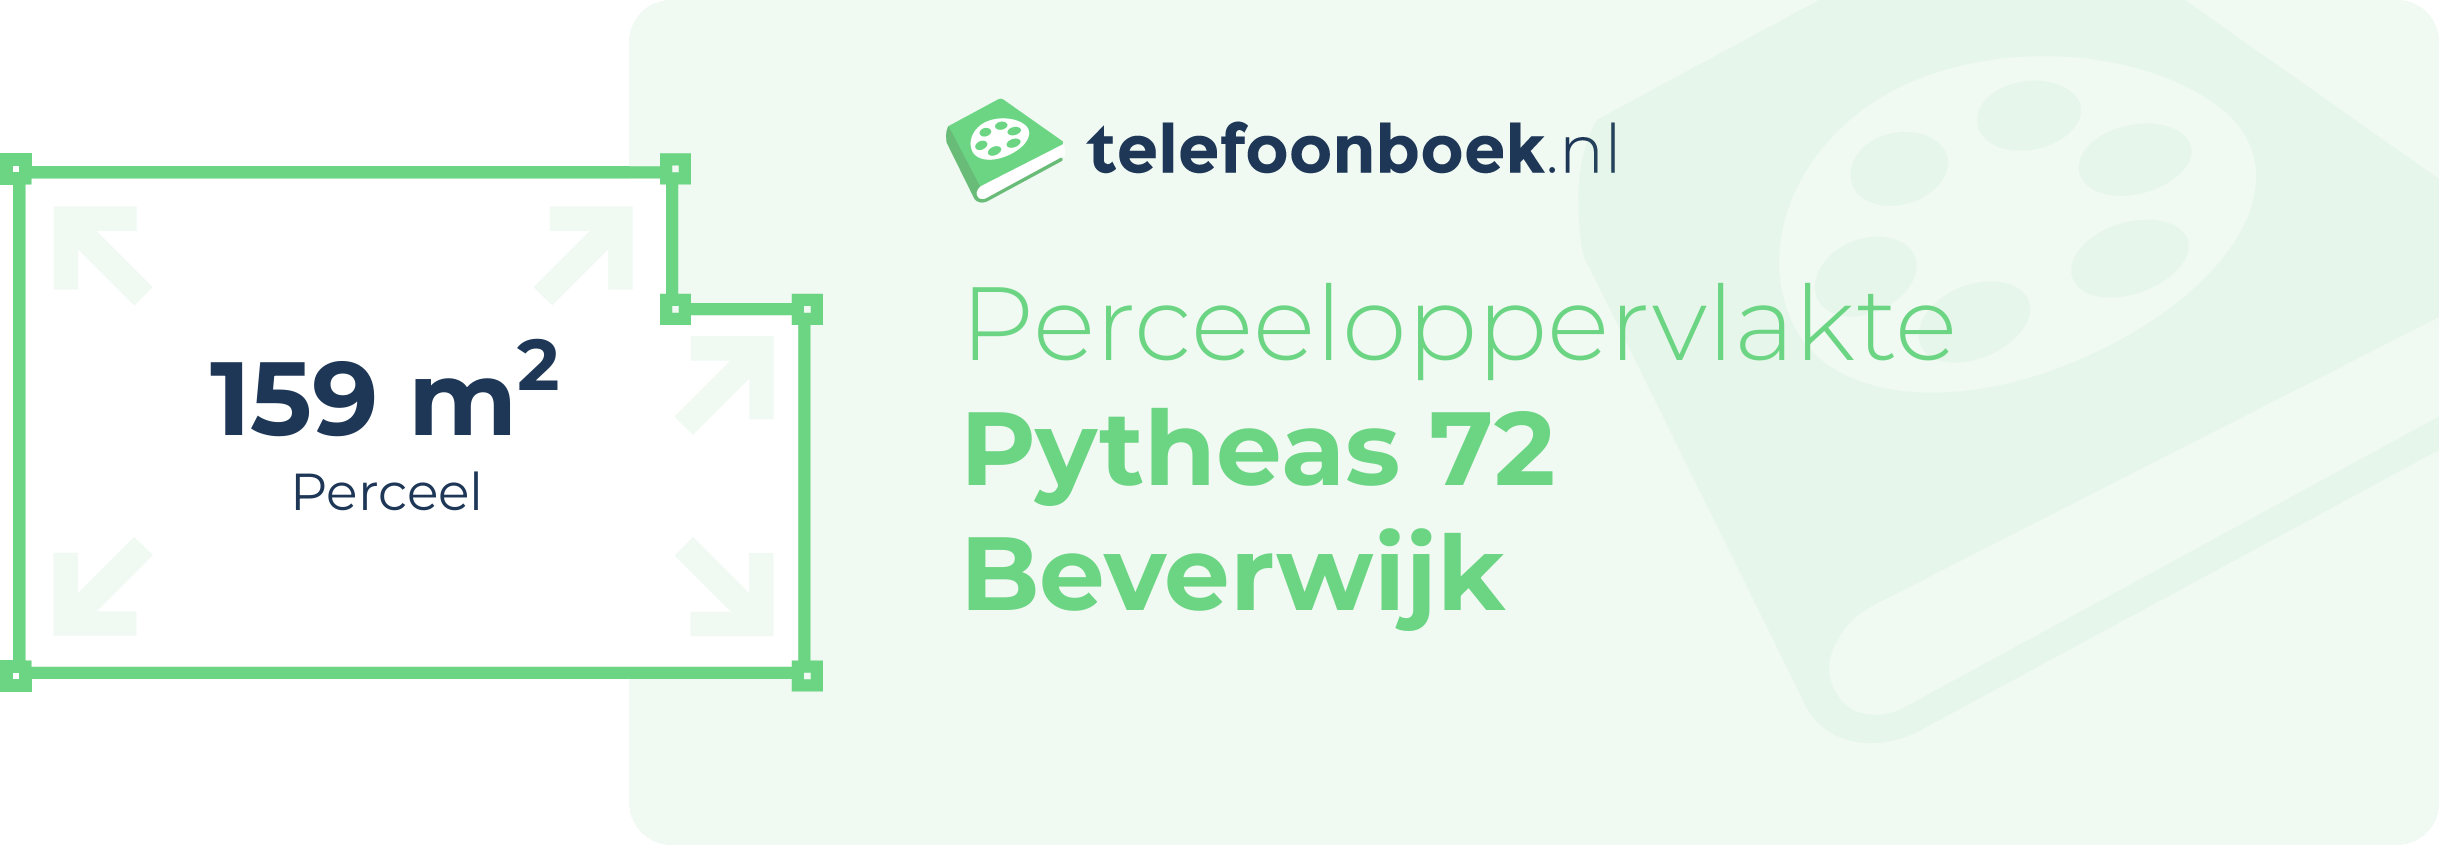 Perceeloppervlakte Pytheas 72 Beverwijk